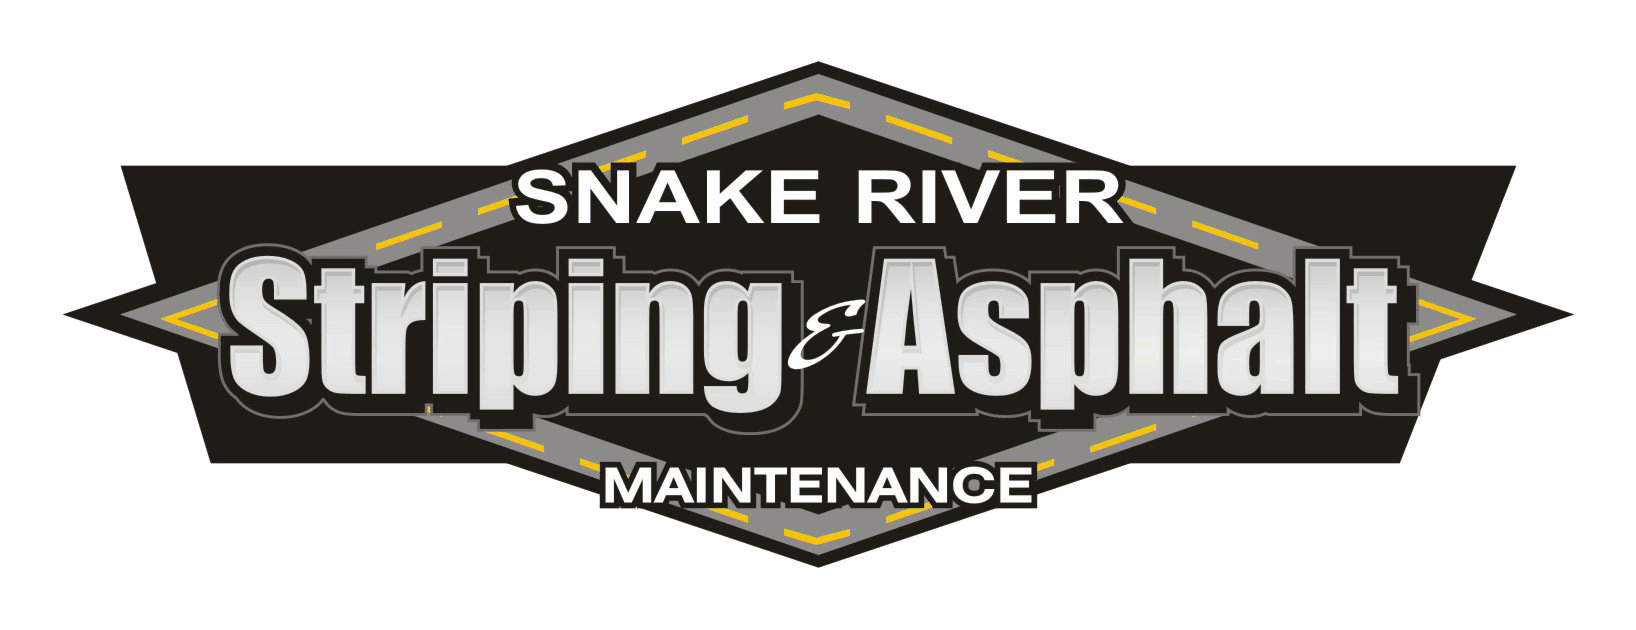 Snake River Striping & Asphalt Maintenance